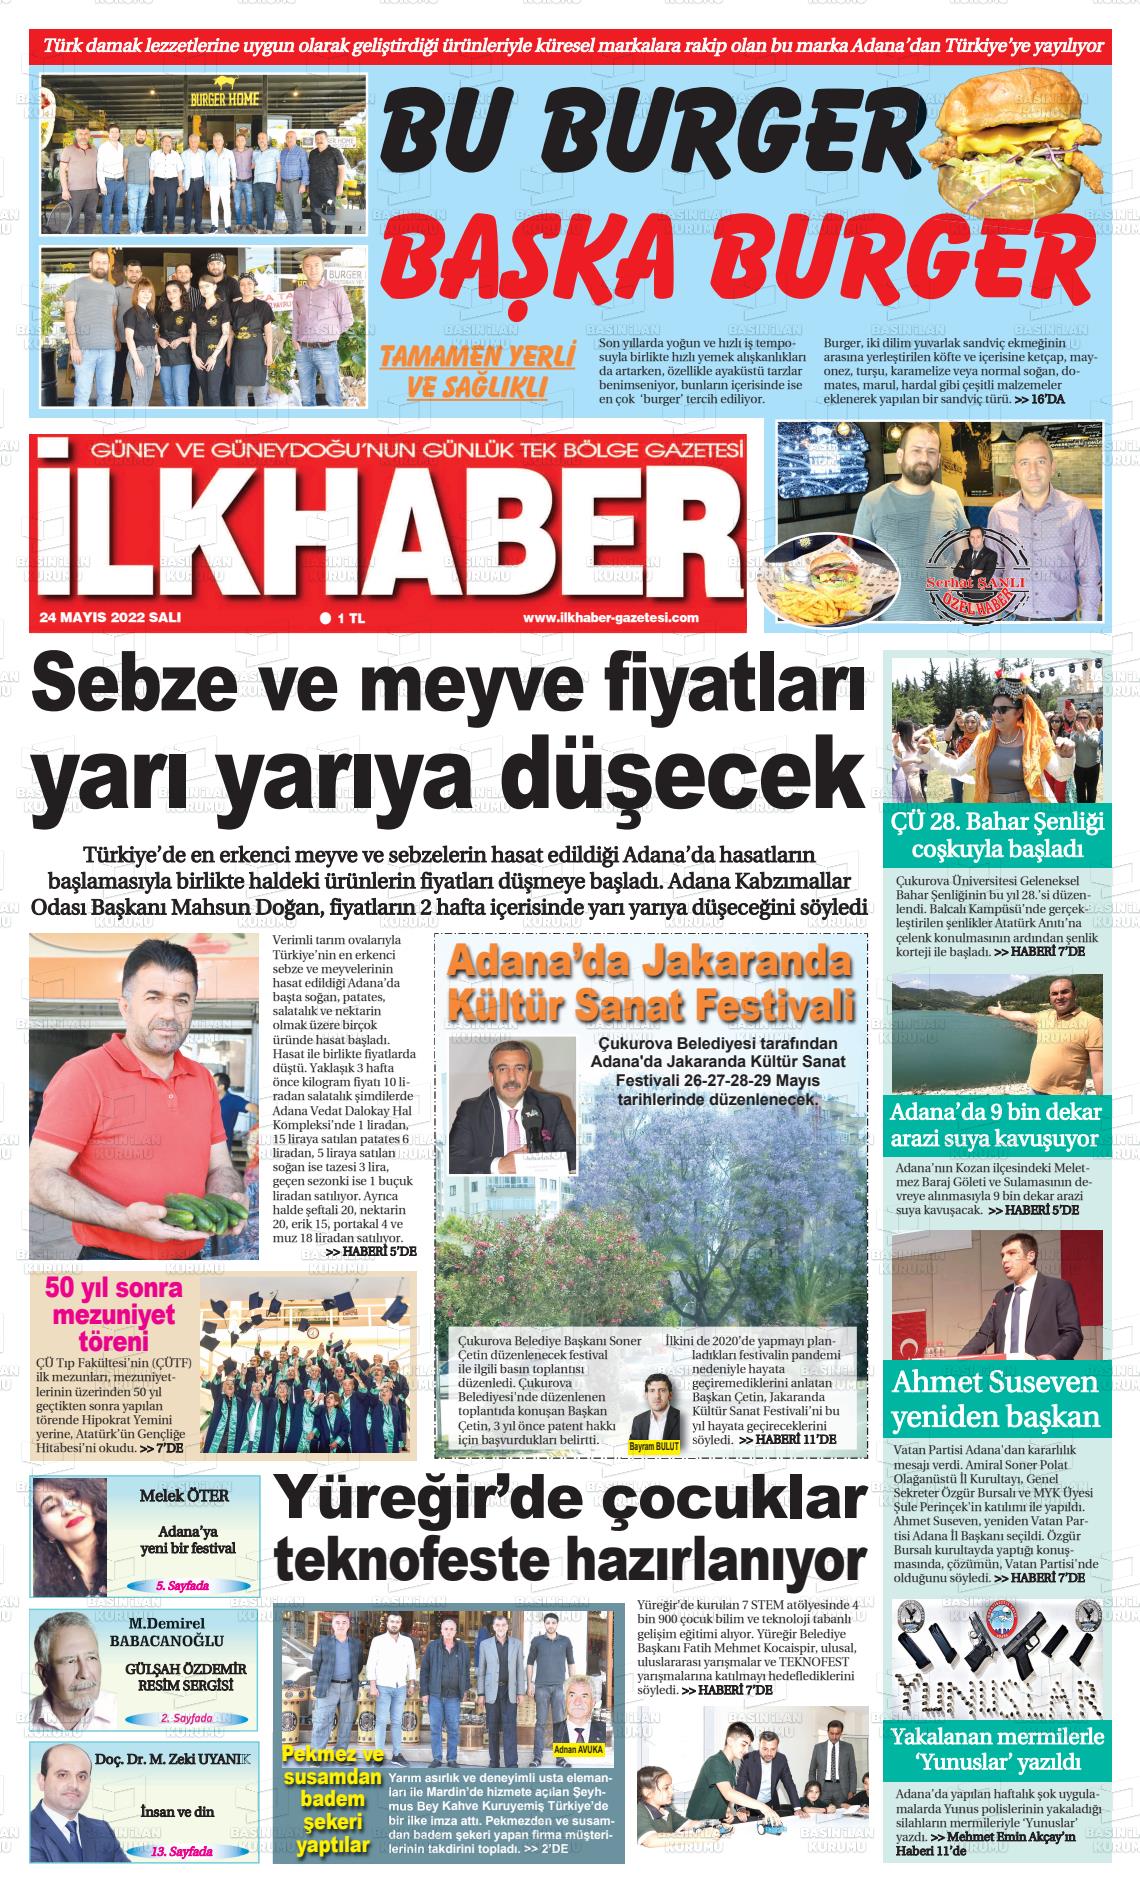 24 Mayıs 2022 İlk Haber Gazete Manşeti